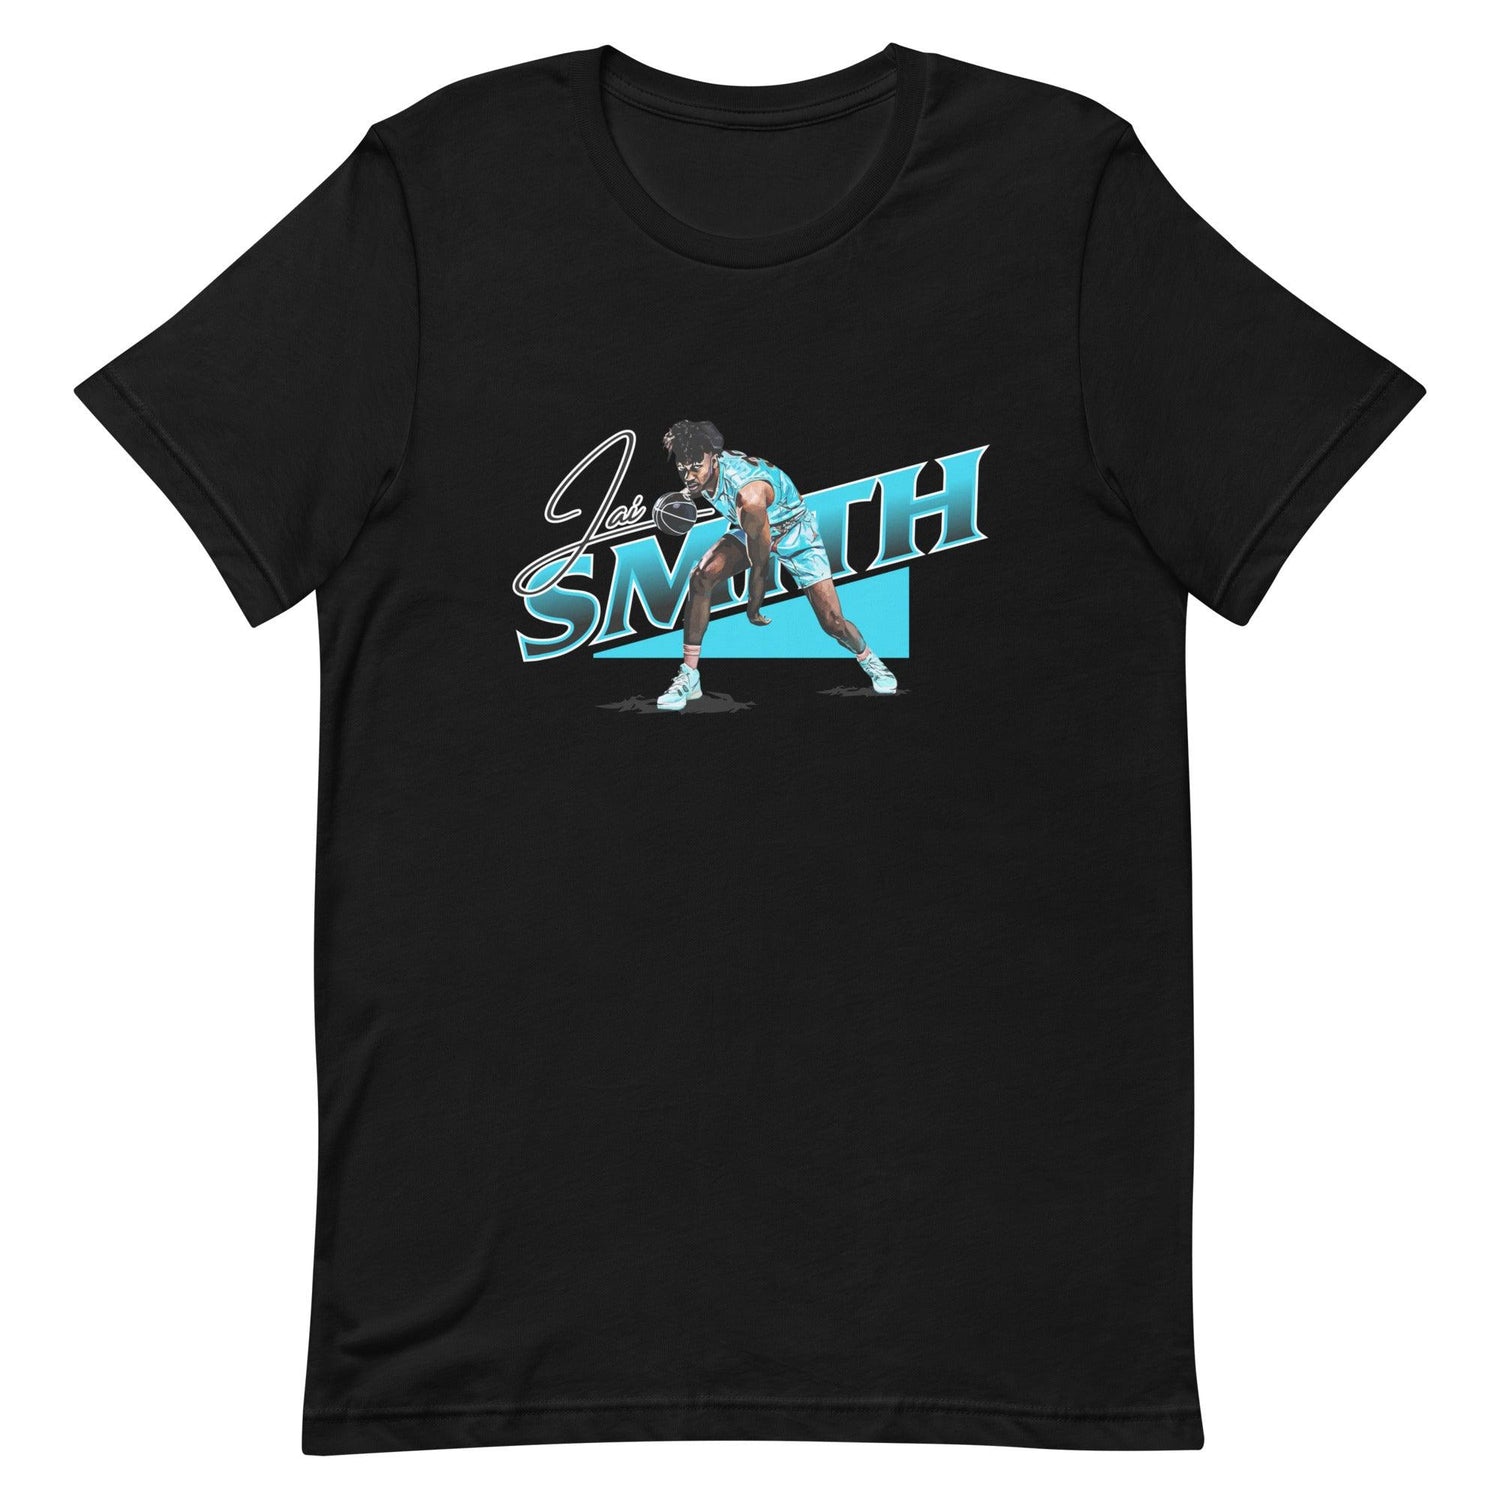 Jai Smith "Iceman" t-shirt - Fan Arch